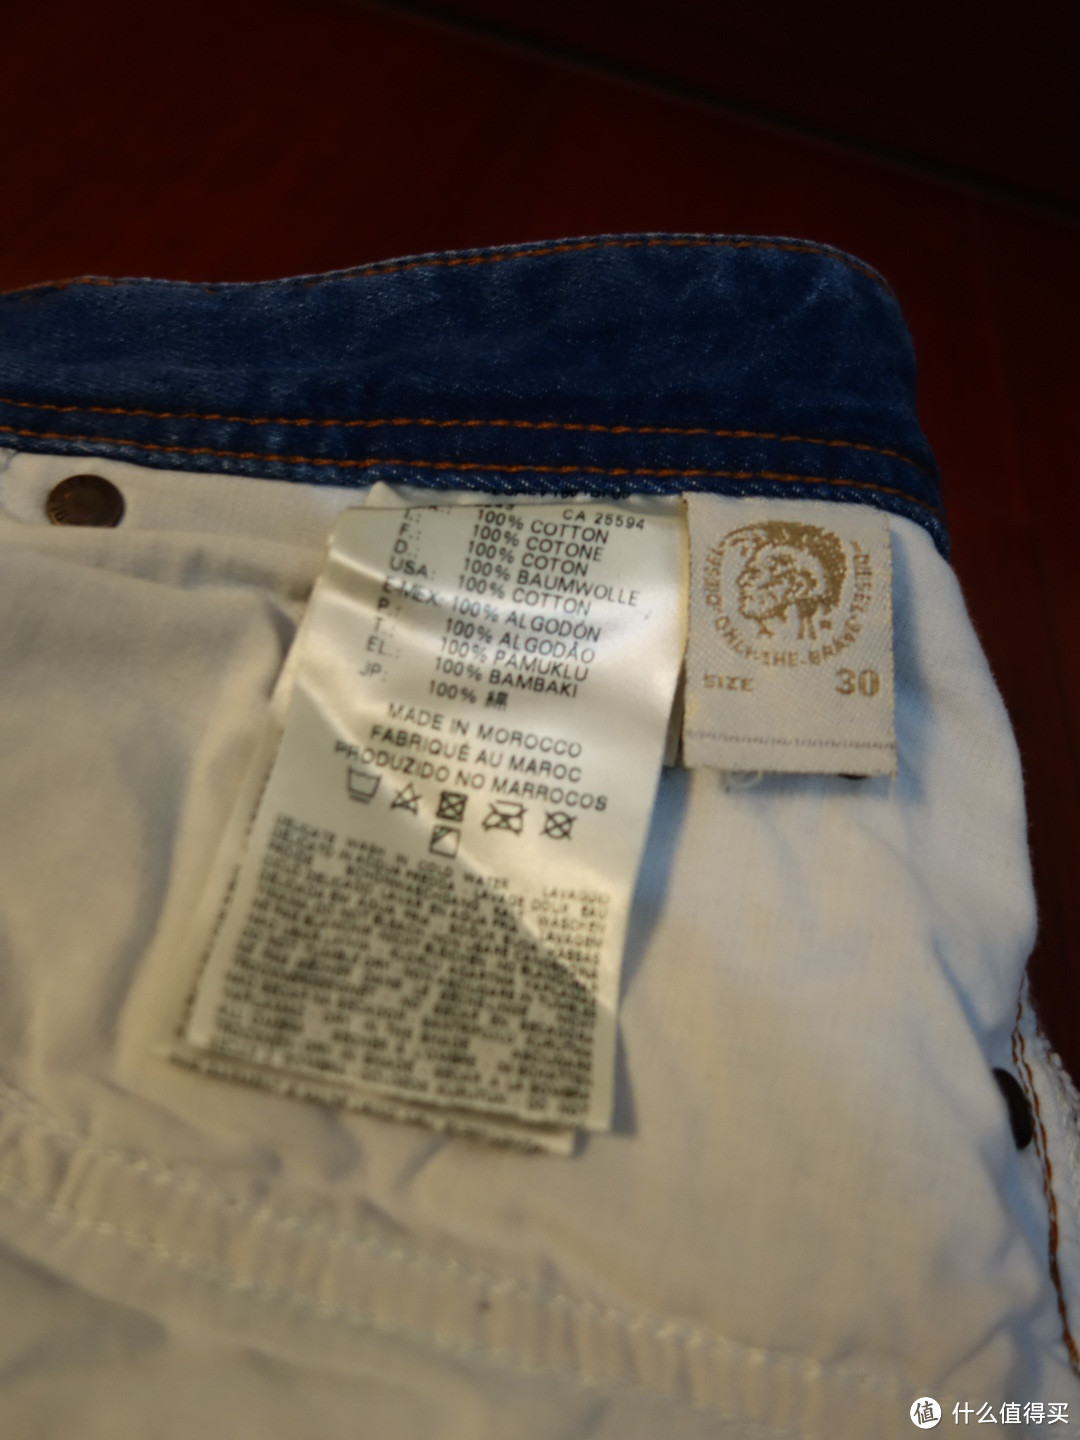 第一条柴油裤：DIESEL Larkee Regular Straight-Leg Jean 0830W 牛仔裤